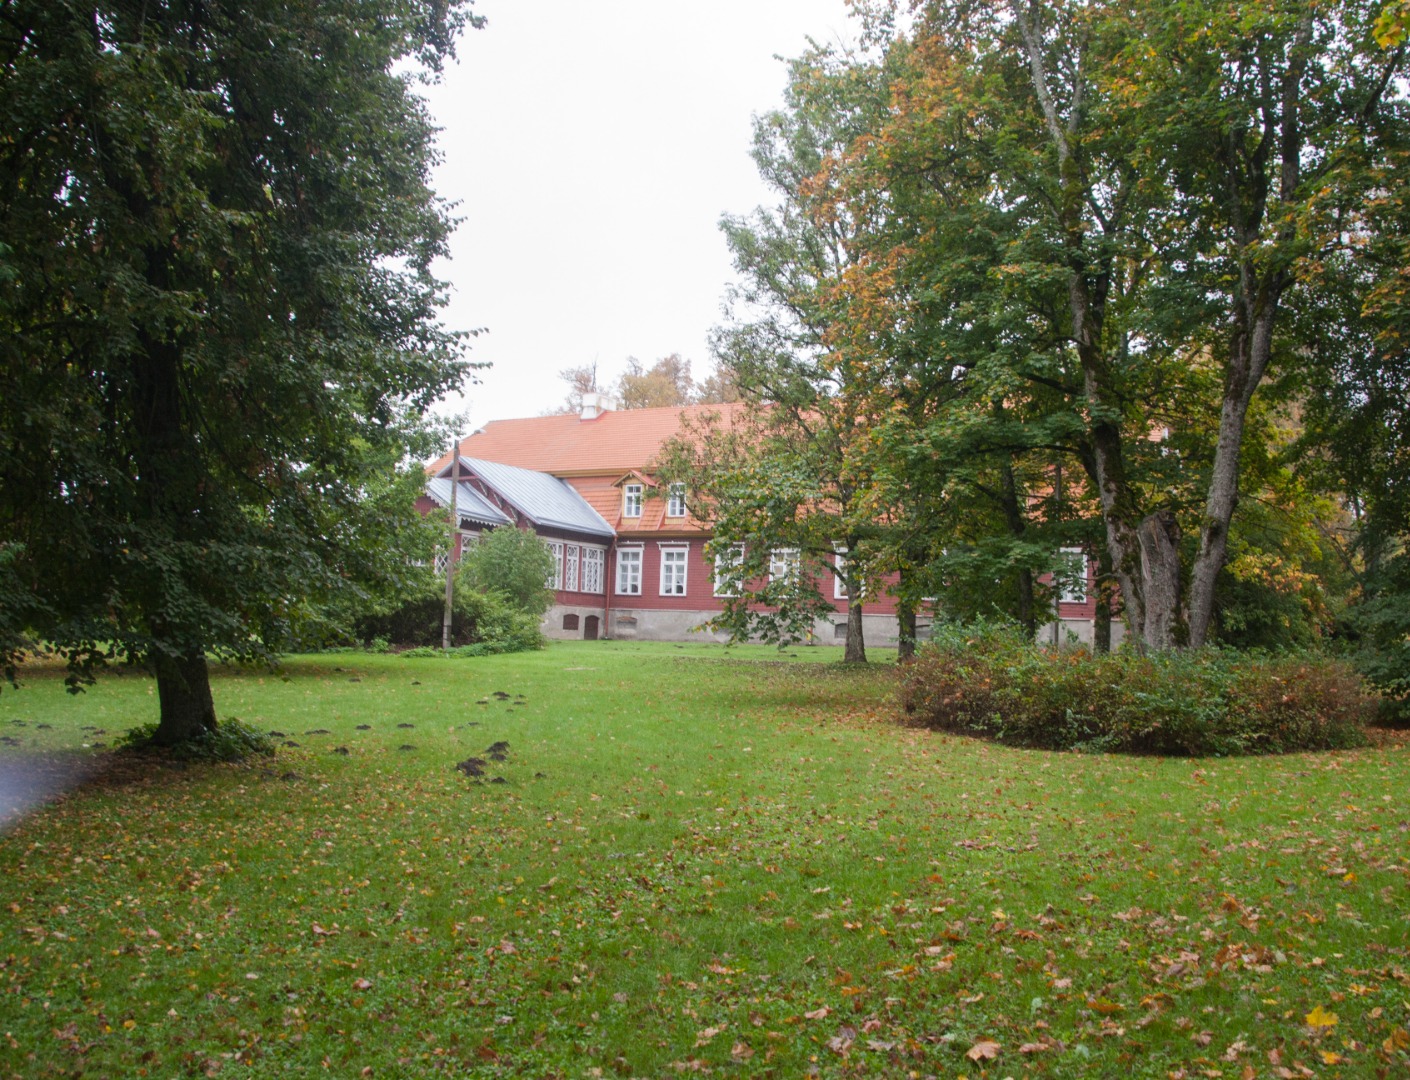 Main building of Särevere Manor rephoto